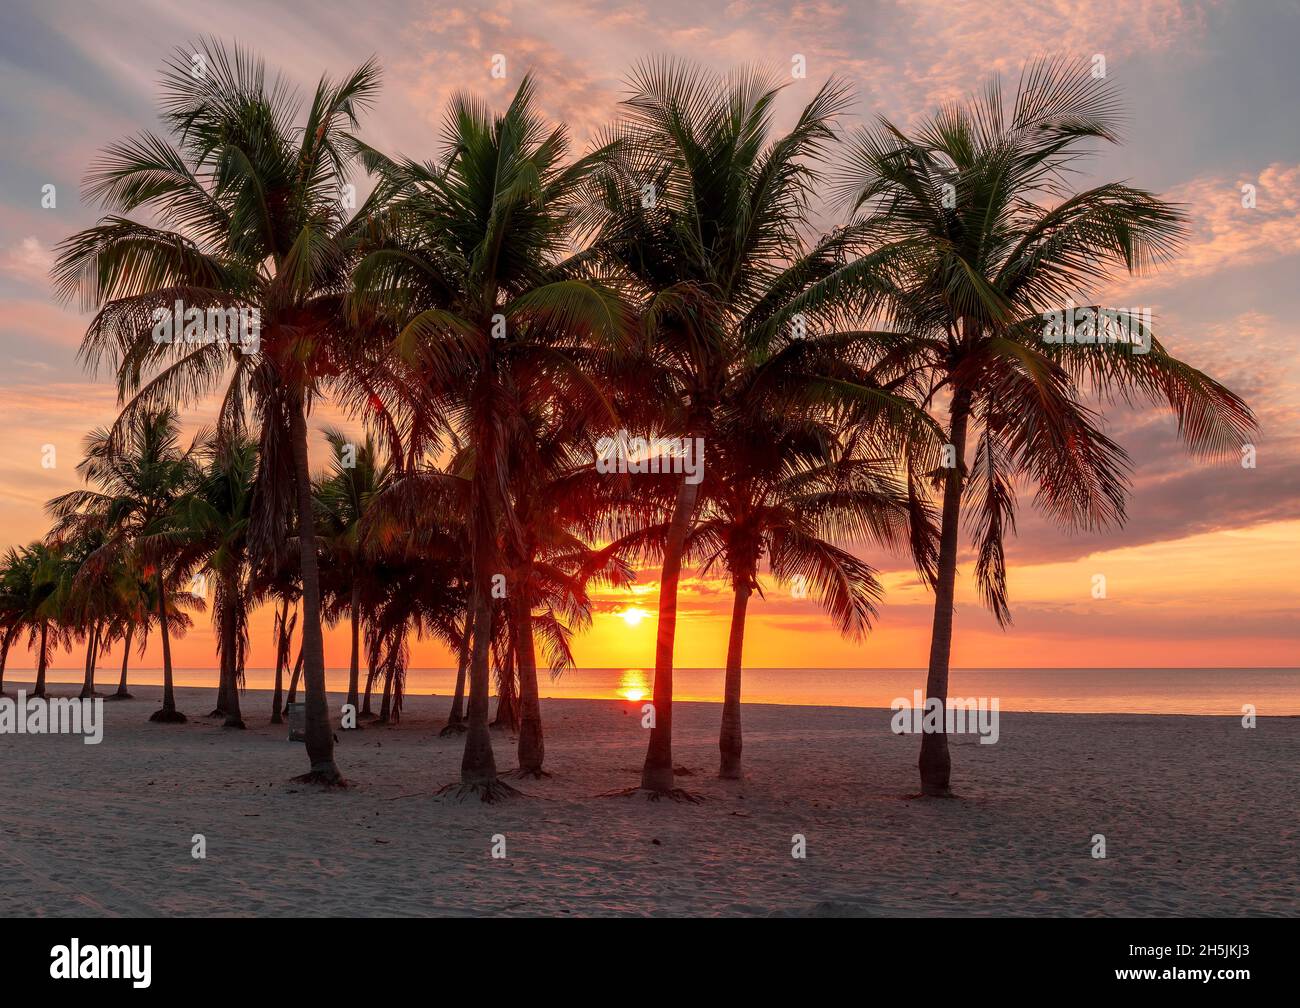 Palm trees at sunrise in Miami beach Stock Photo